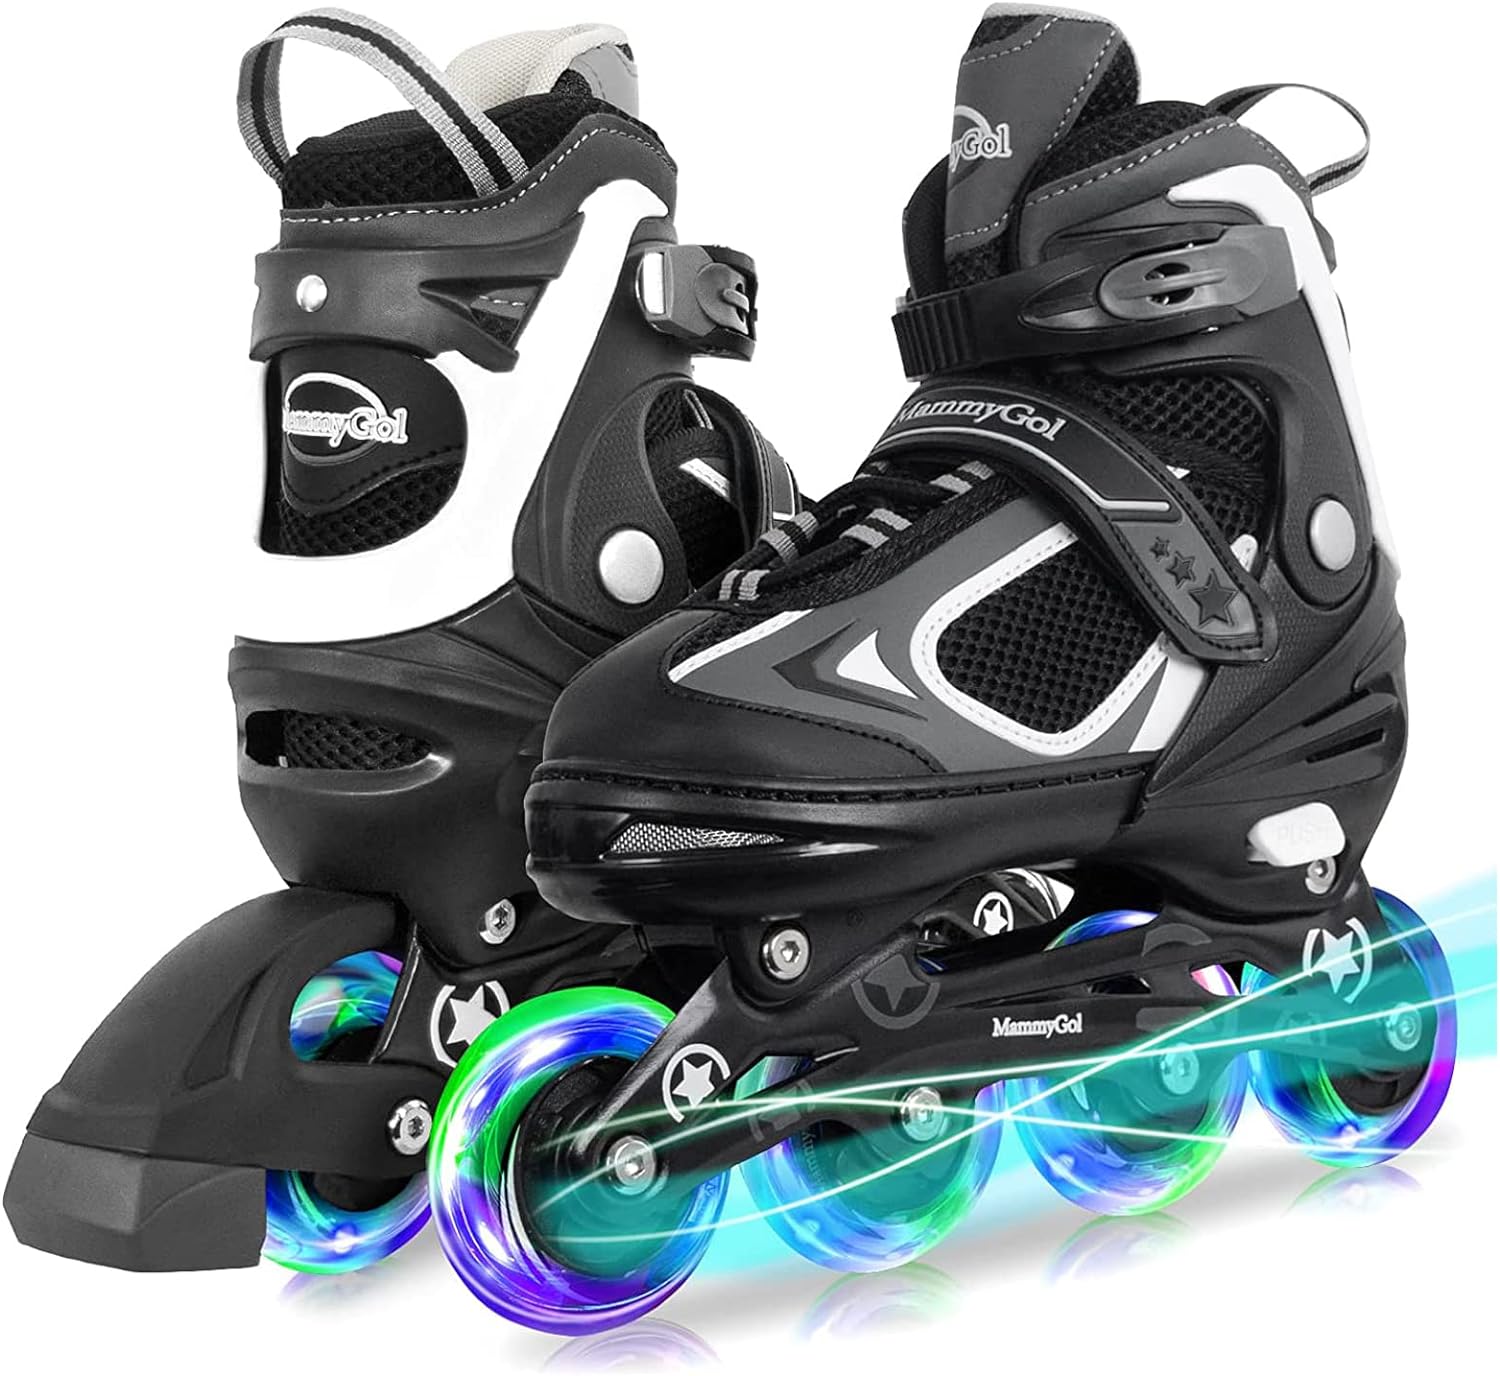 MammyGol Adjustable Inline Skates for Kids, Boys Blades Skate Girls with Light up Wheels